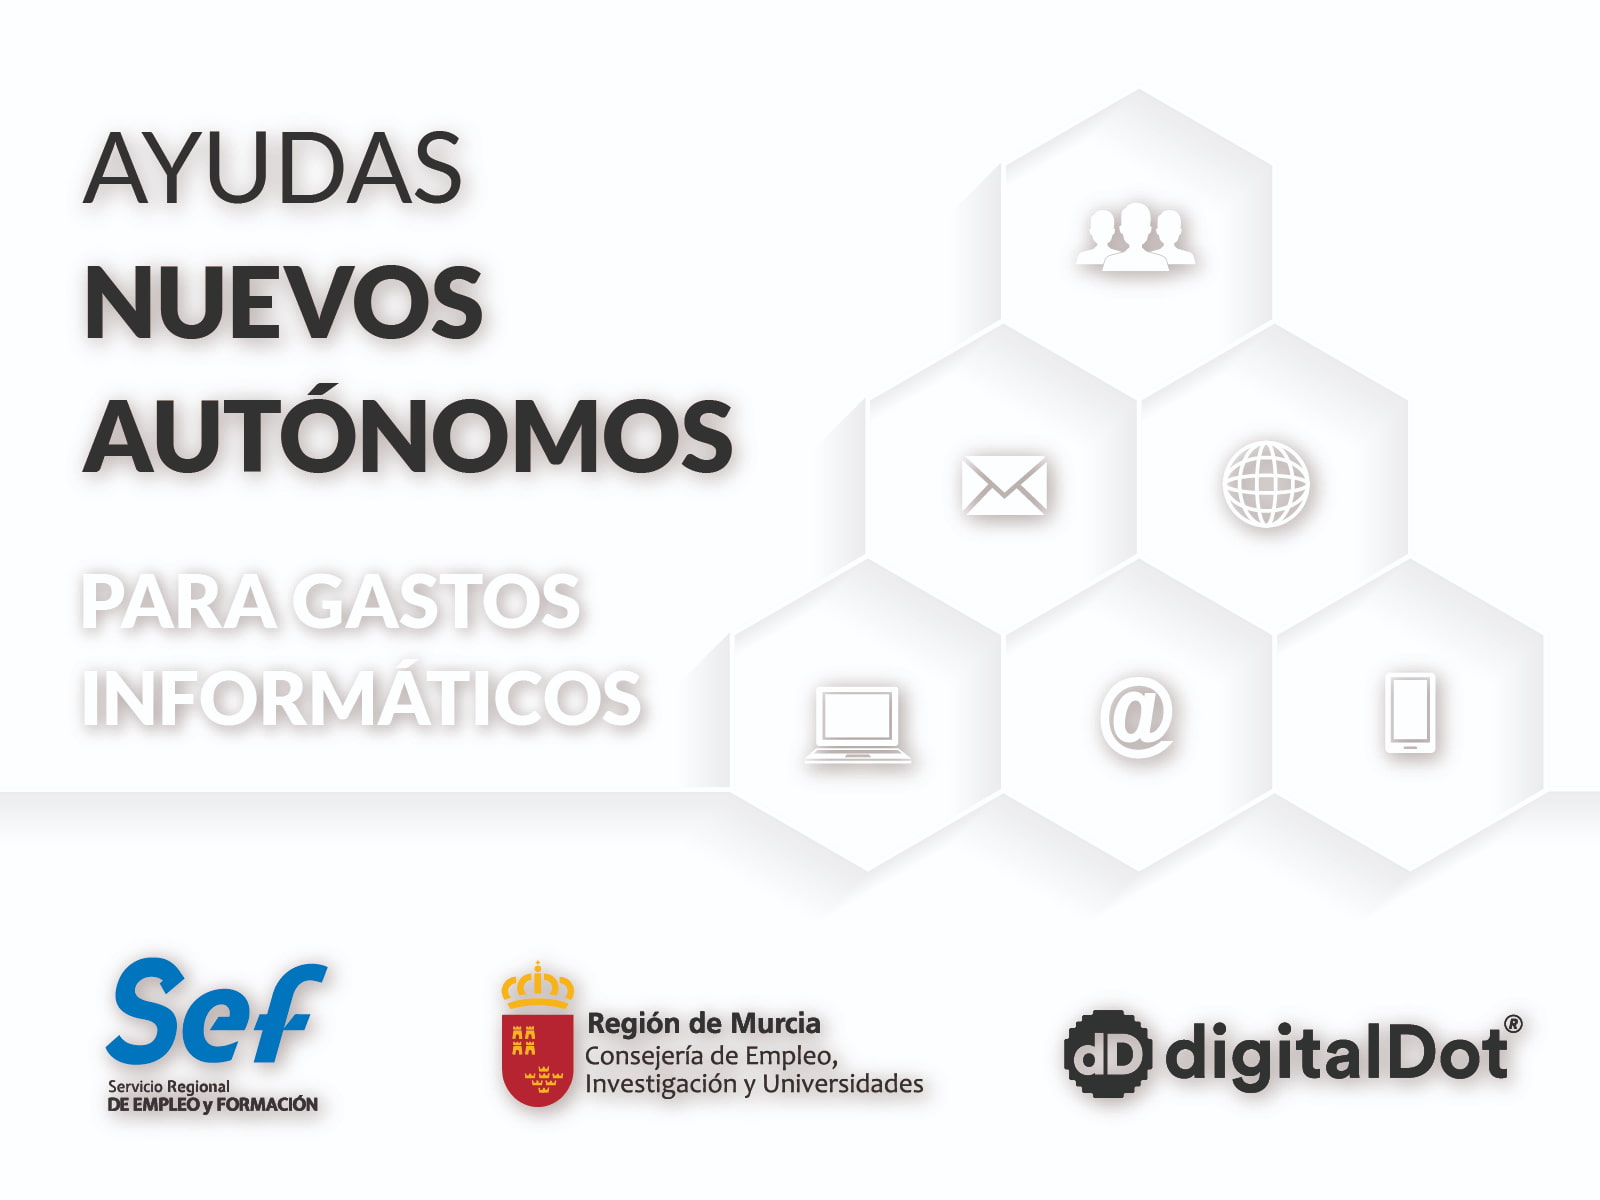 Ayudas emprendedores Murcia. digitalDot